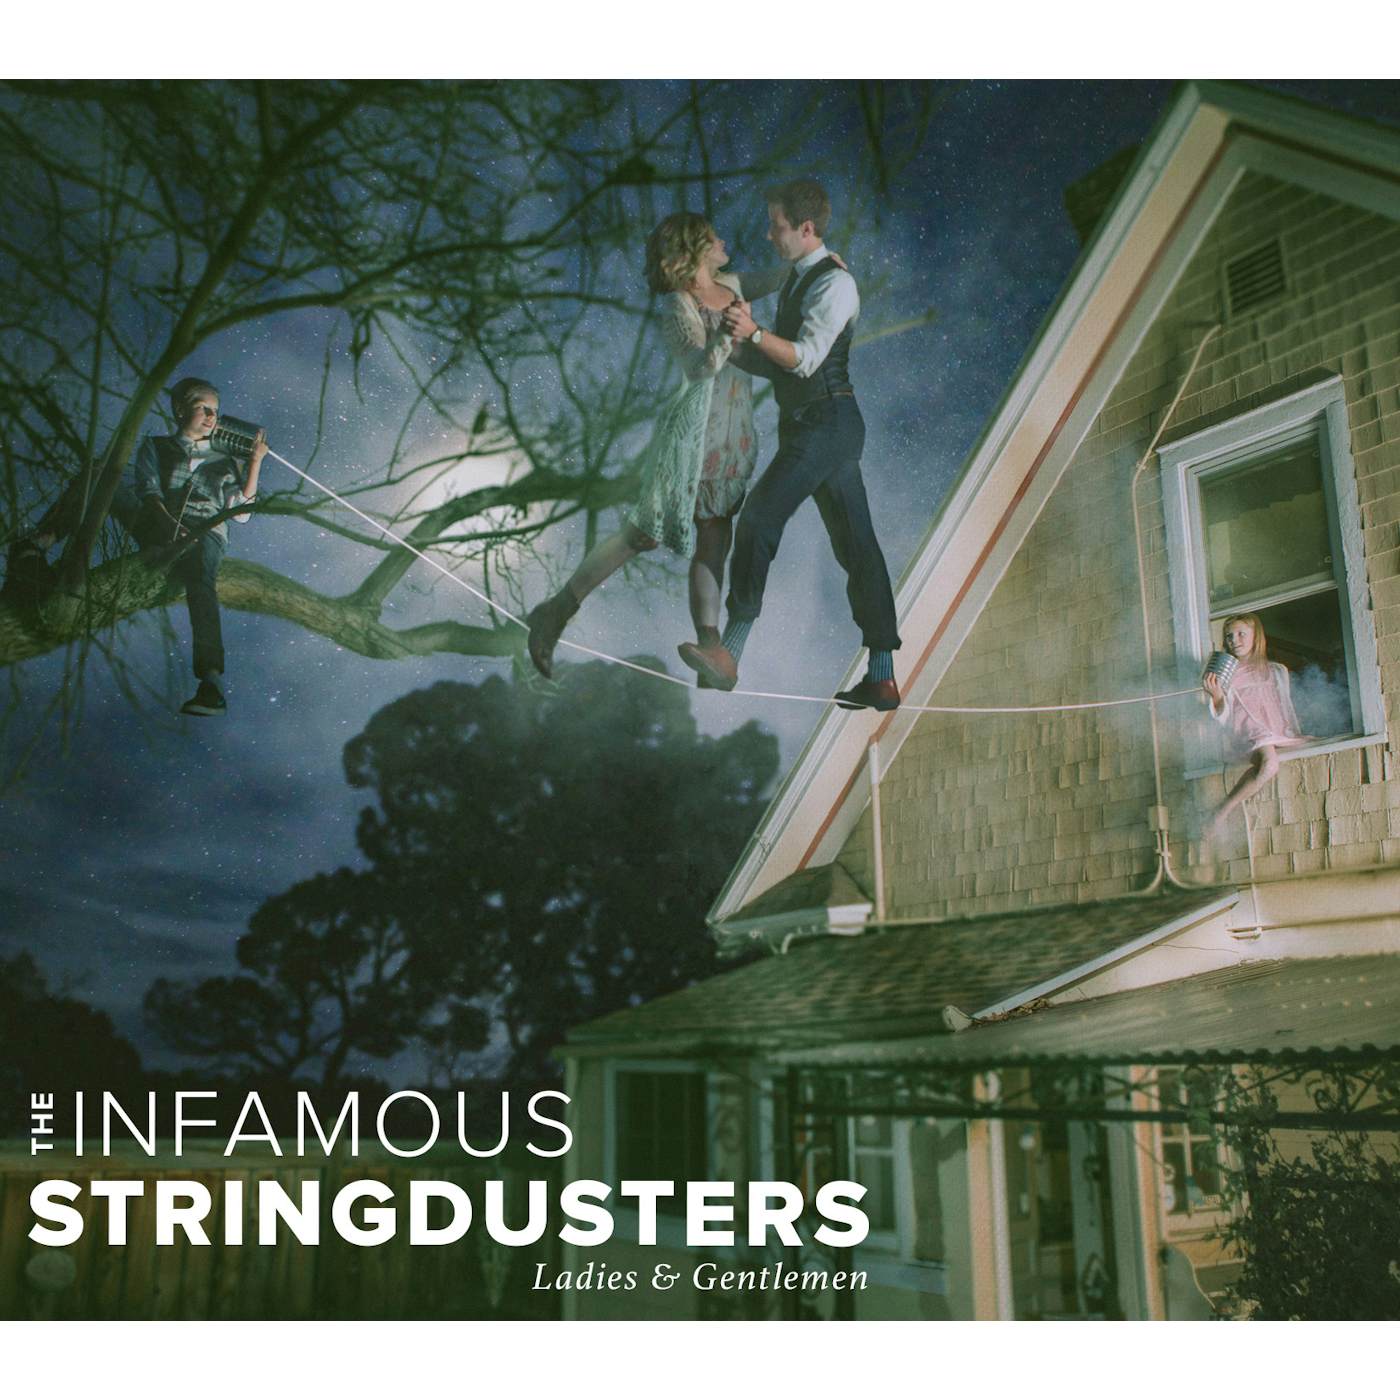 The Infamous Stringdusters LADIES & GENTLEMEN CD